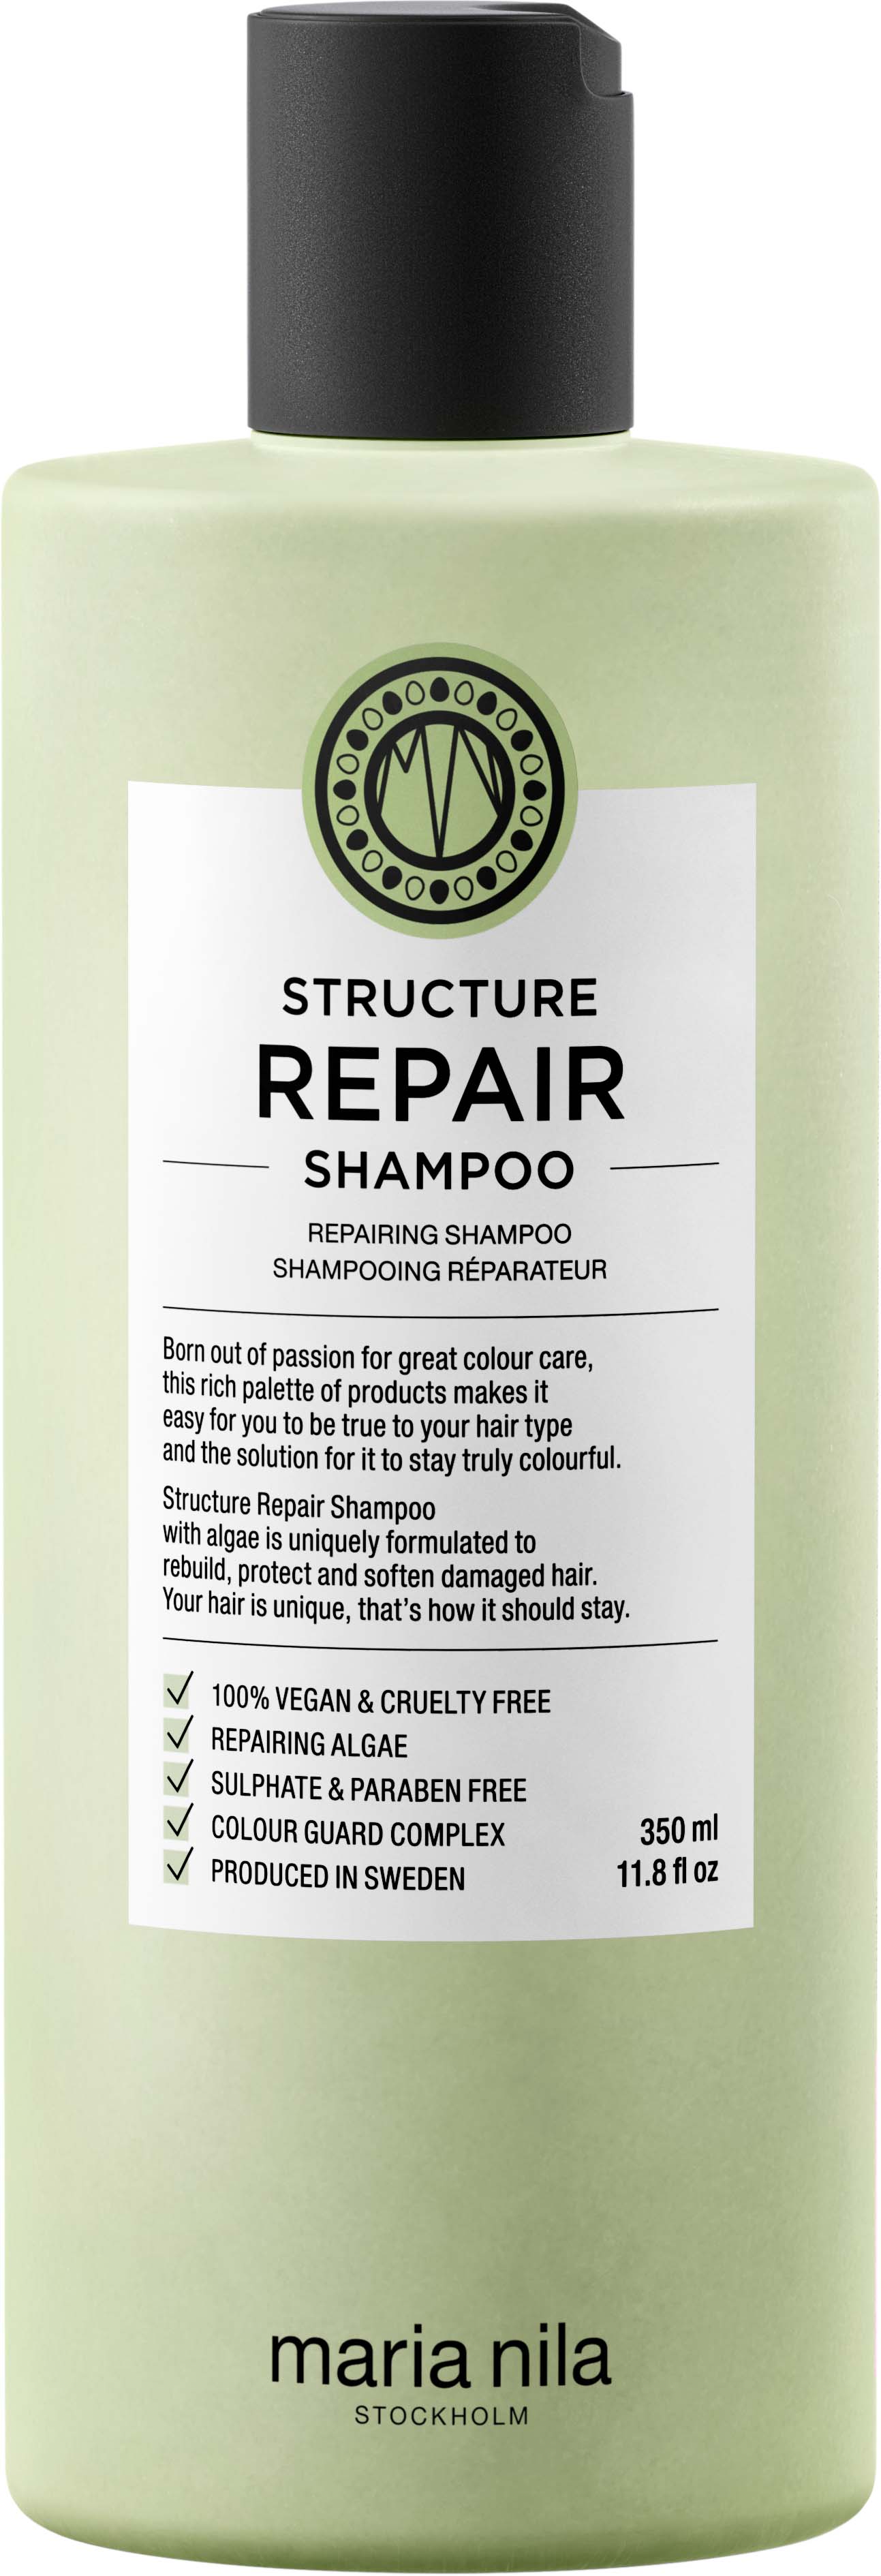 maria nila Structure Repair Shampoo ml lyko.com